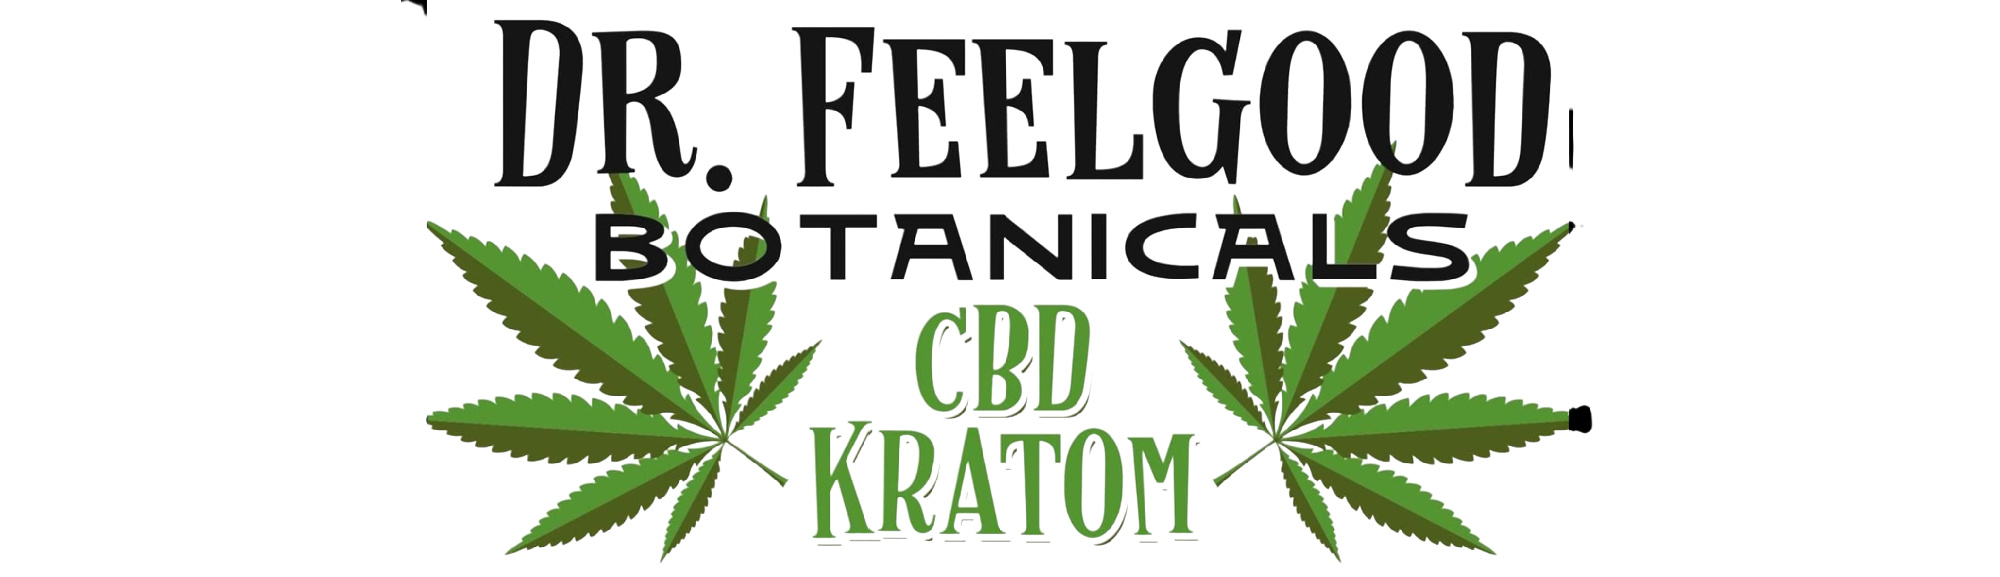 image of dr feelgood botanicals cbd and kratom